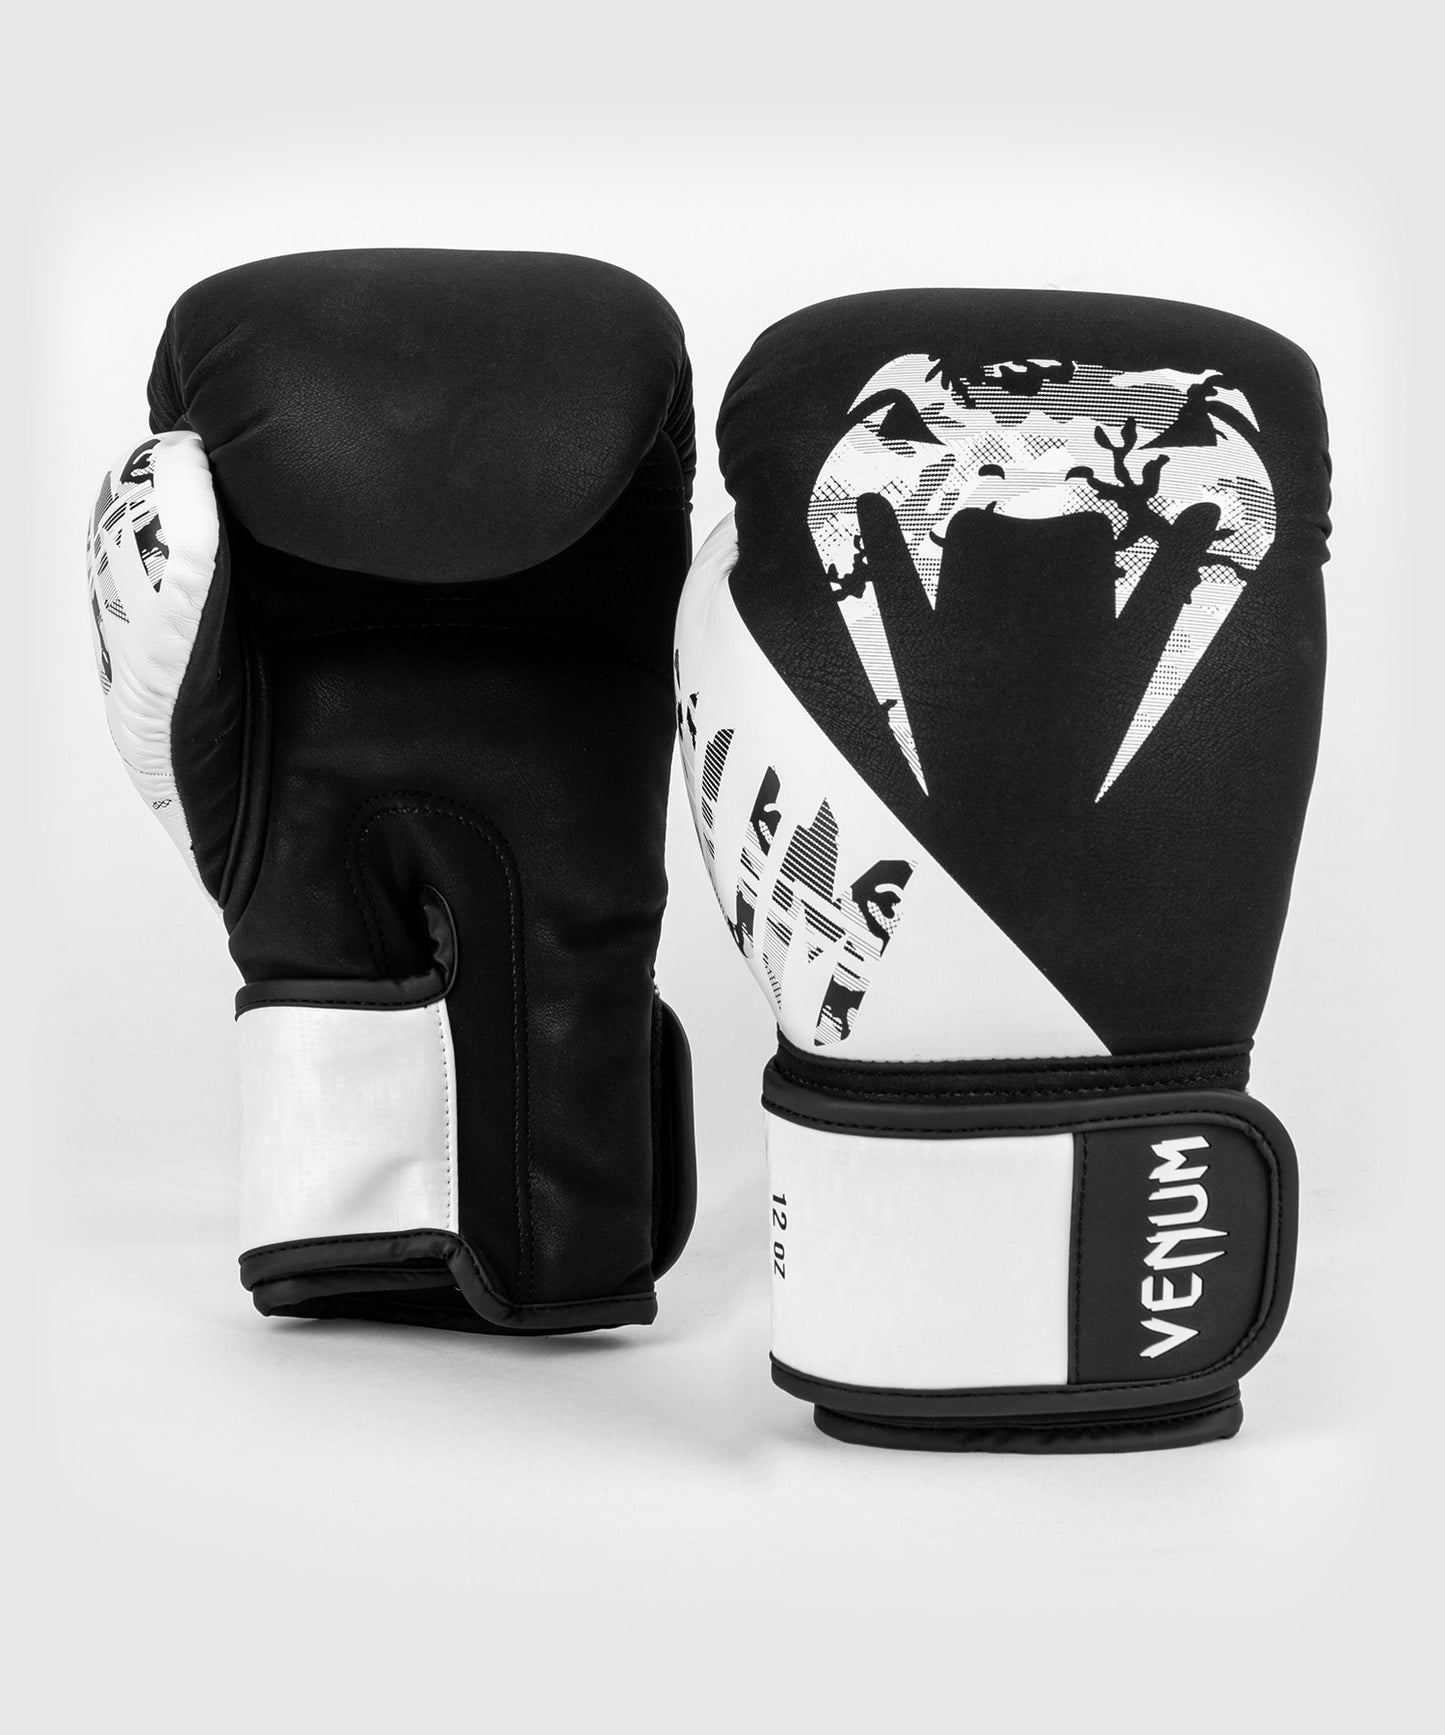 Venum Legacy Boxing Gloves